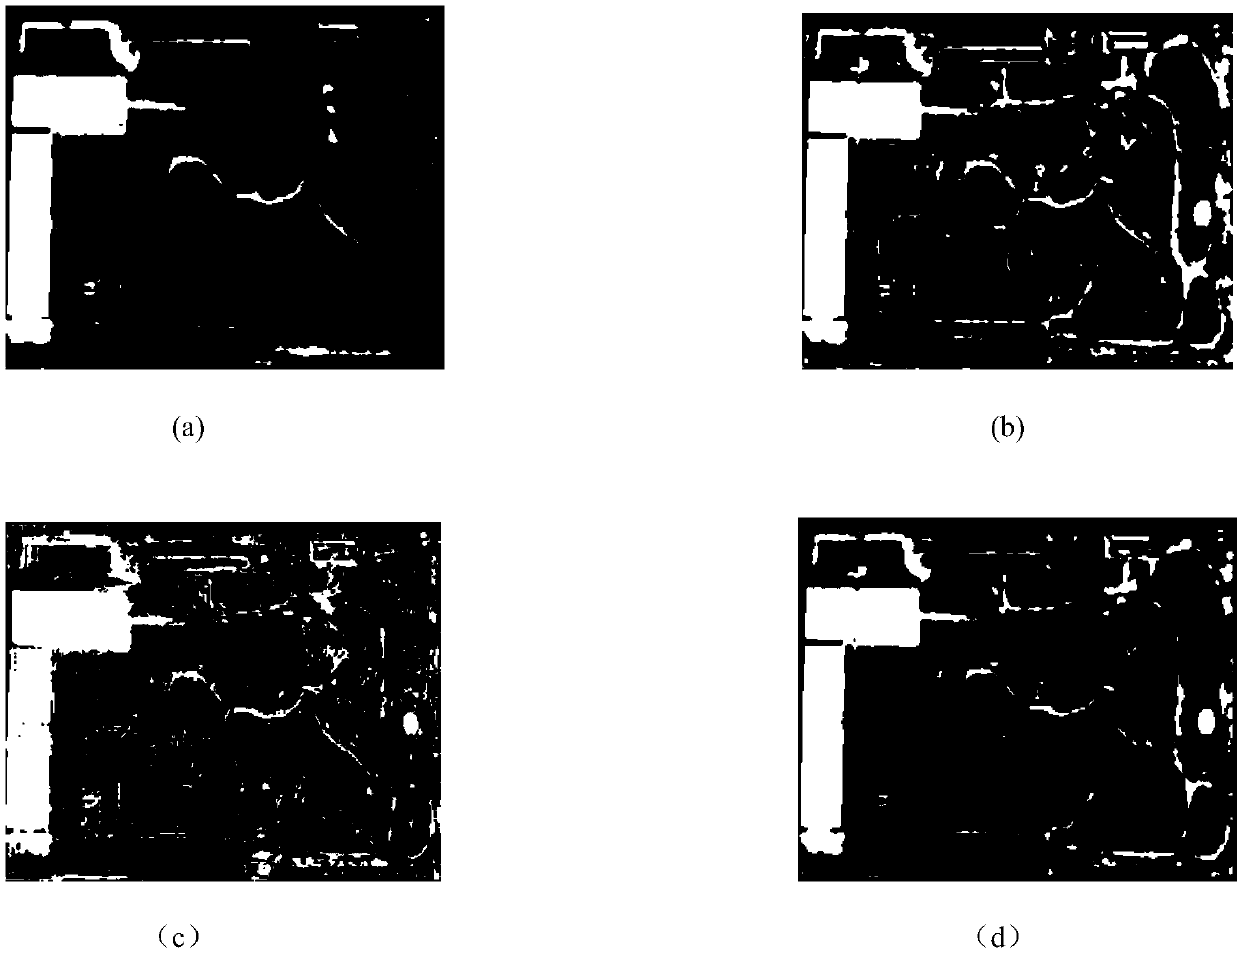 Generative-adversarial-network-based multi-spectral image change detection method